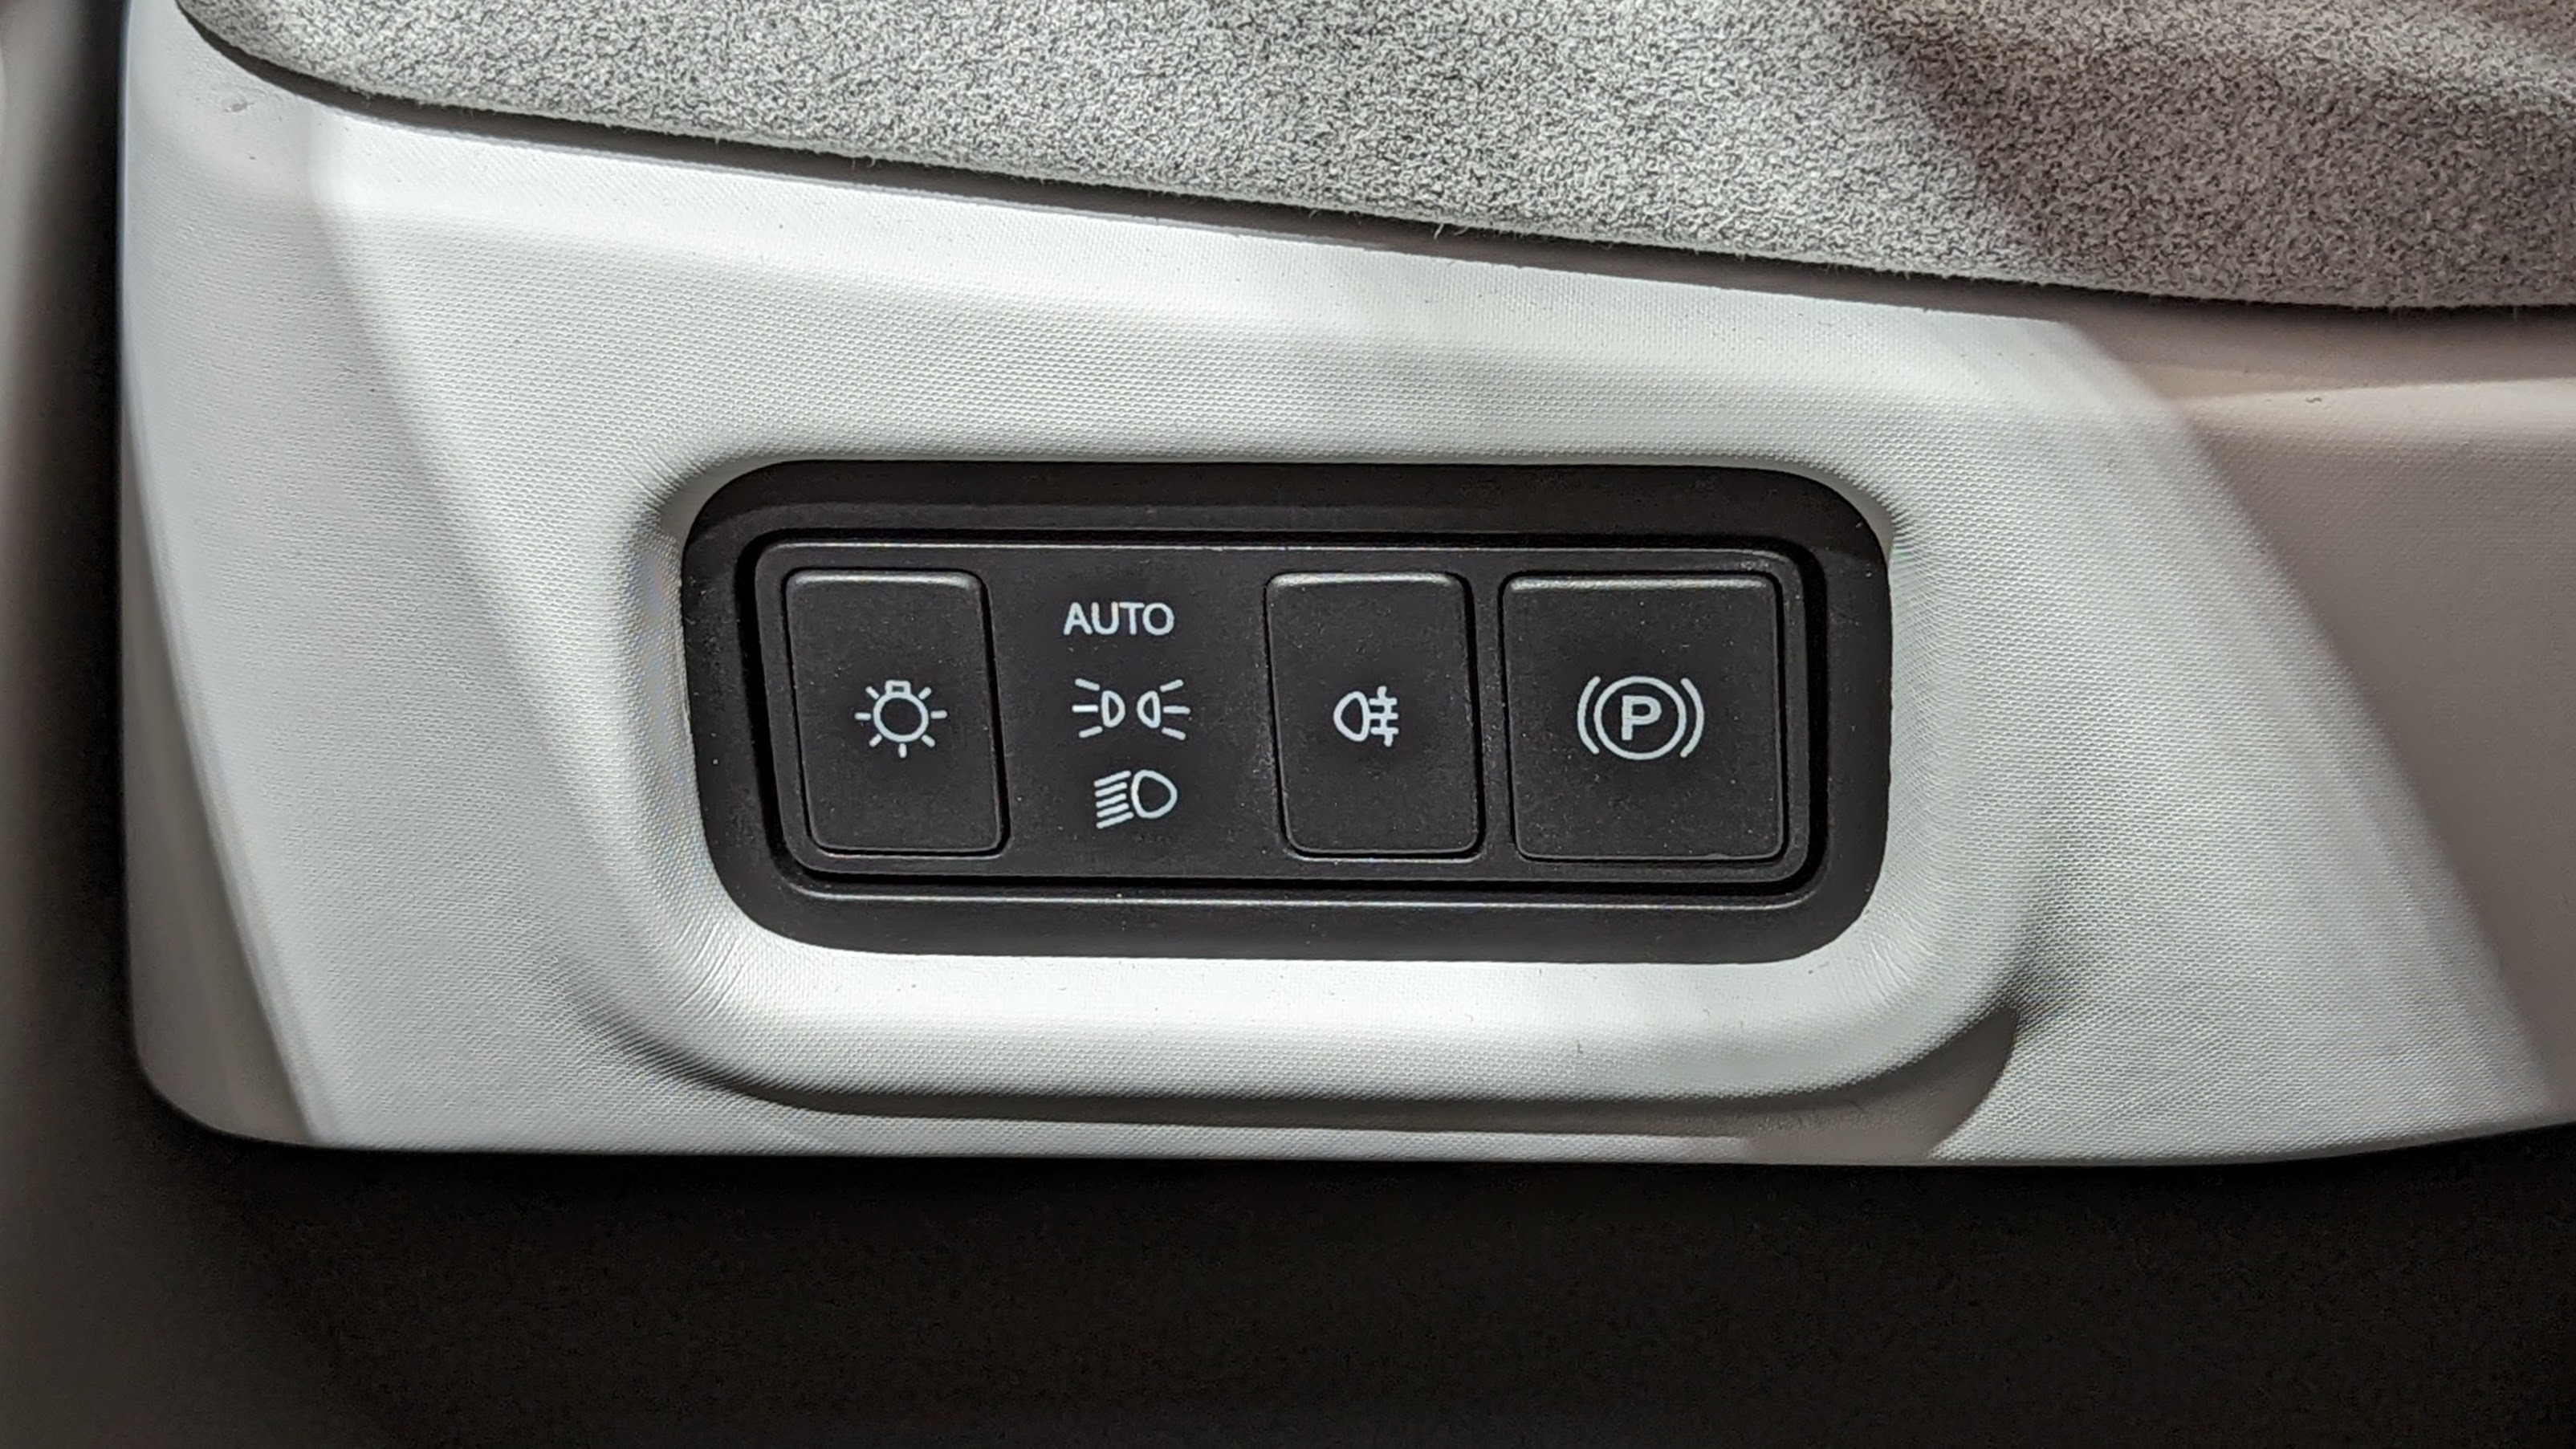 Light control buttons